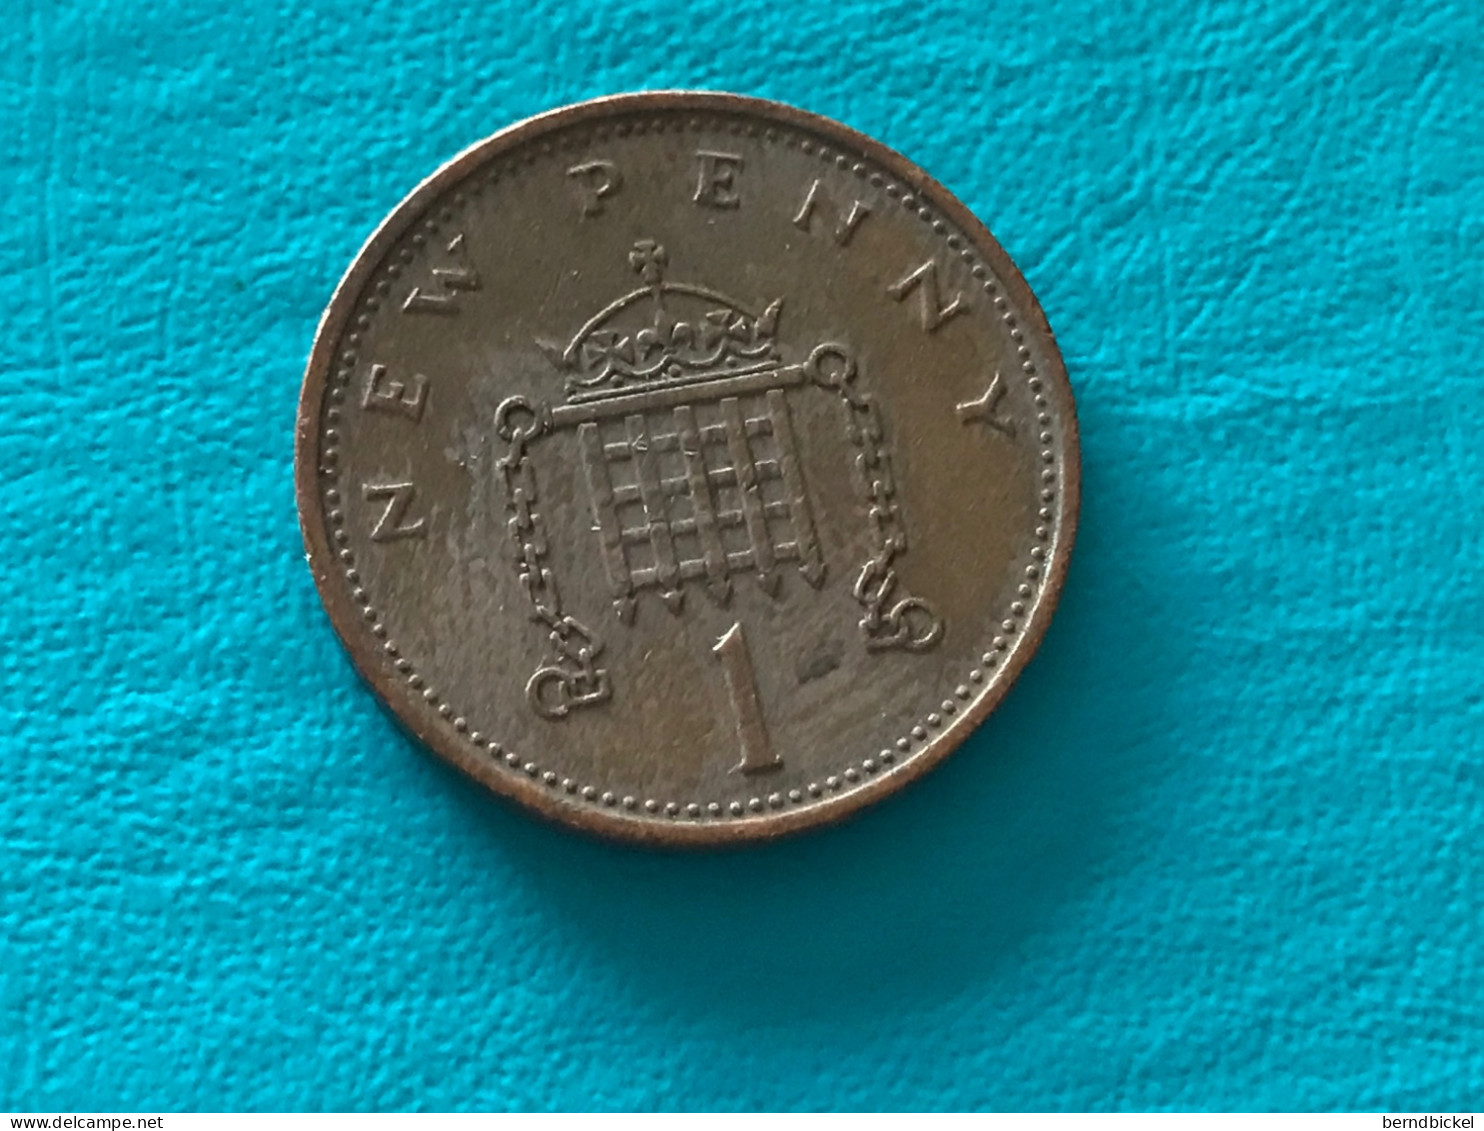 Münze Münzen Umlaufmünze Großbritannien 1 Penny 1971 - 1 Penny & 1 New Penny